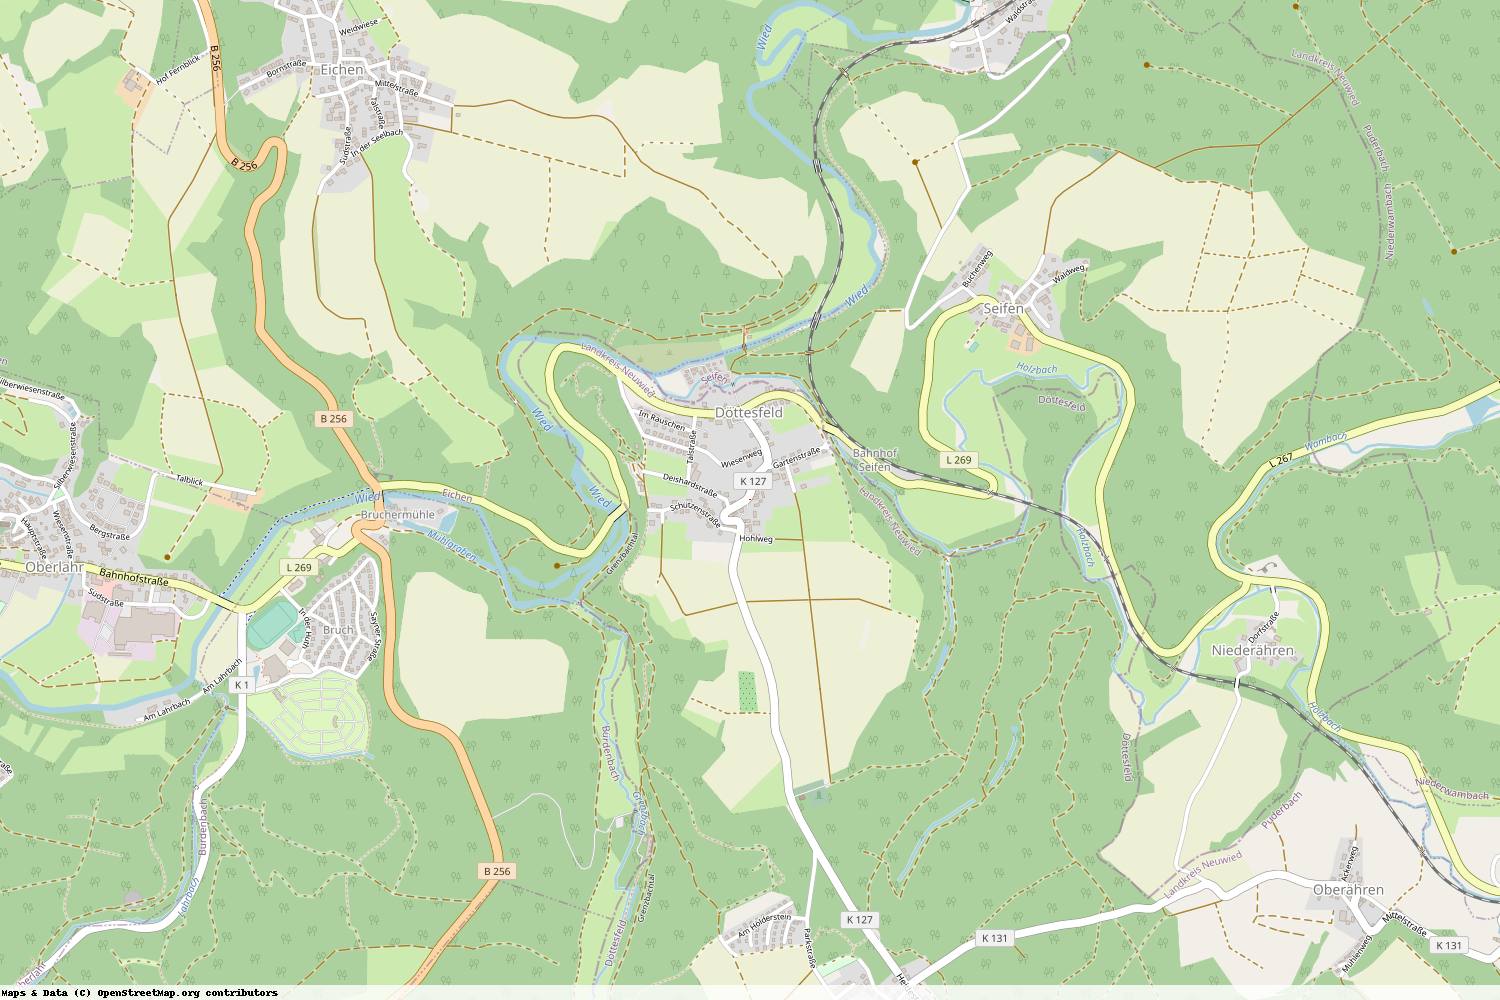 Ist gerade Stromausfall in Rheinland-Pfalz - Neuwied - Döttesfeld?